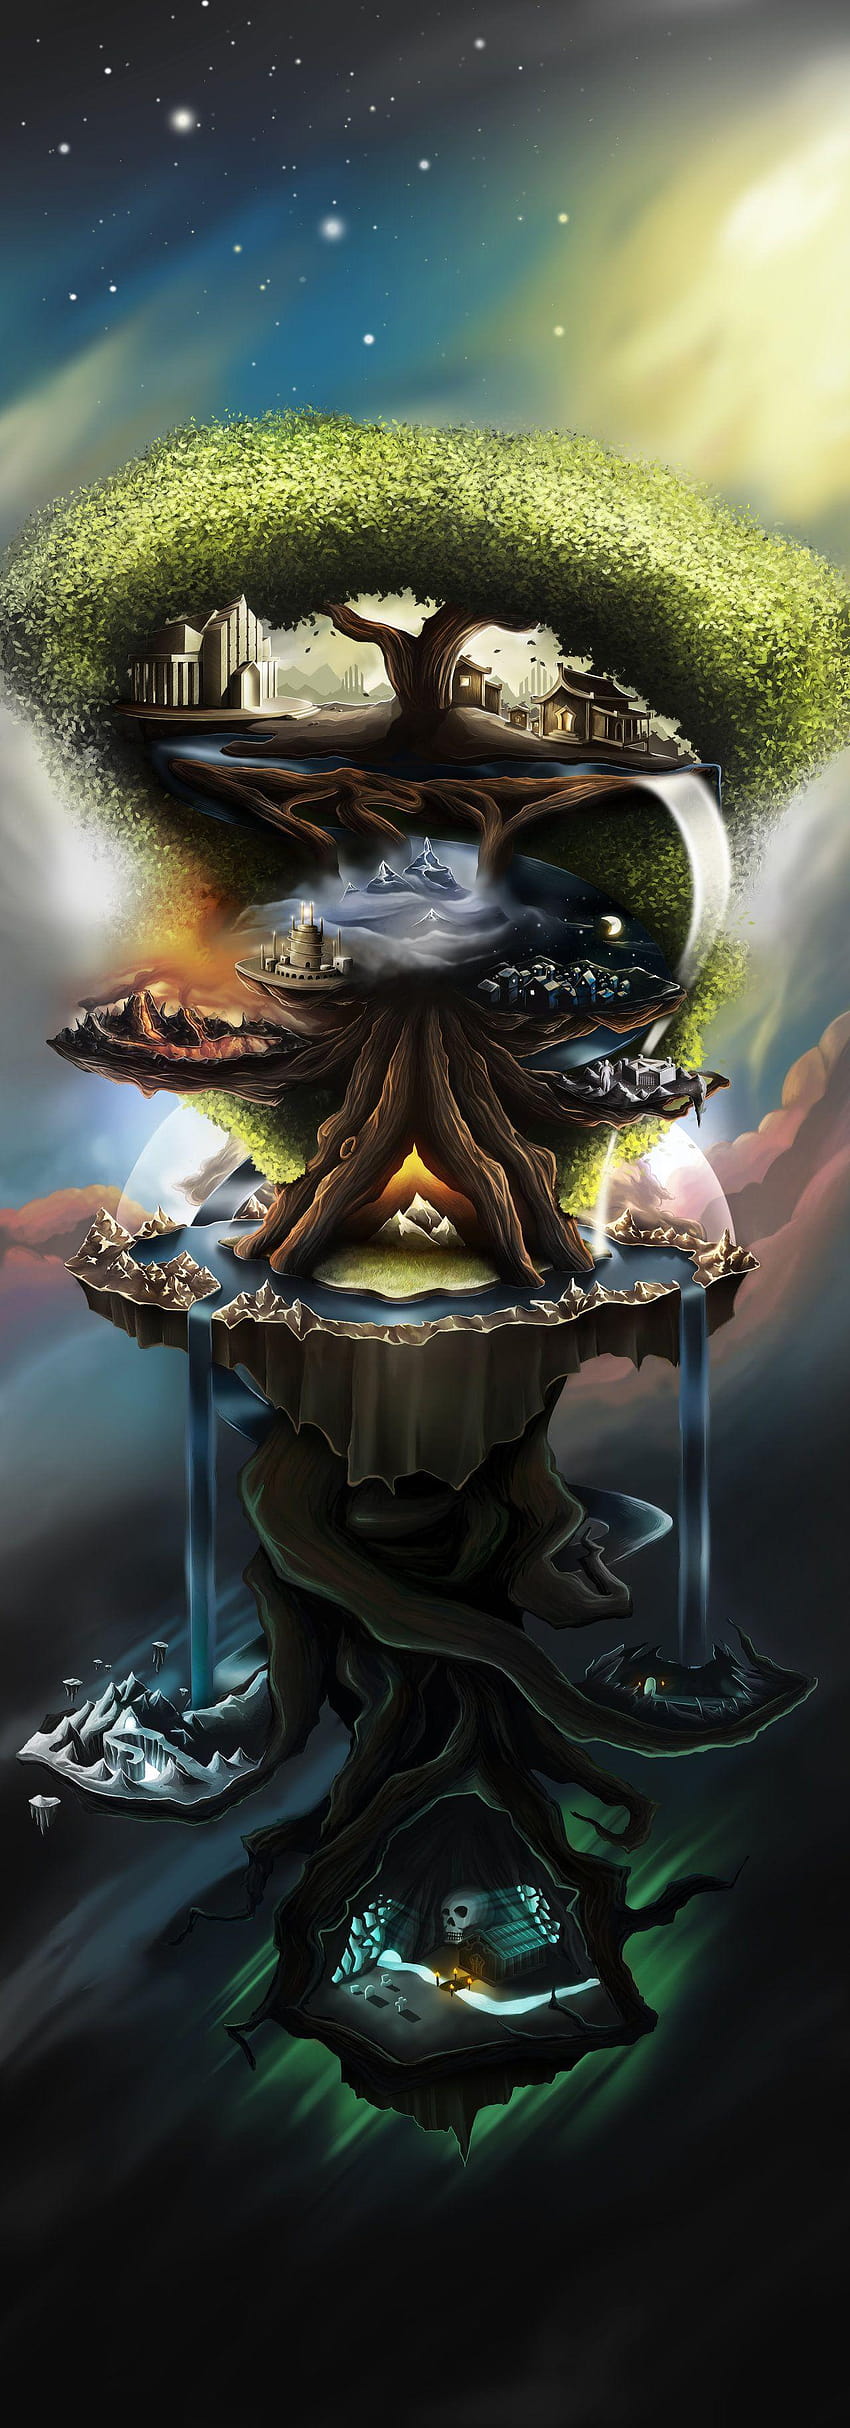 Yggdrasil Tree Yggdrasil l'arbre du monde, mythologie nordique Fond d'écran de téléphone HD